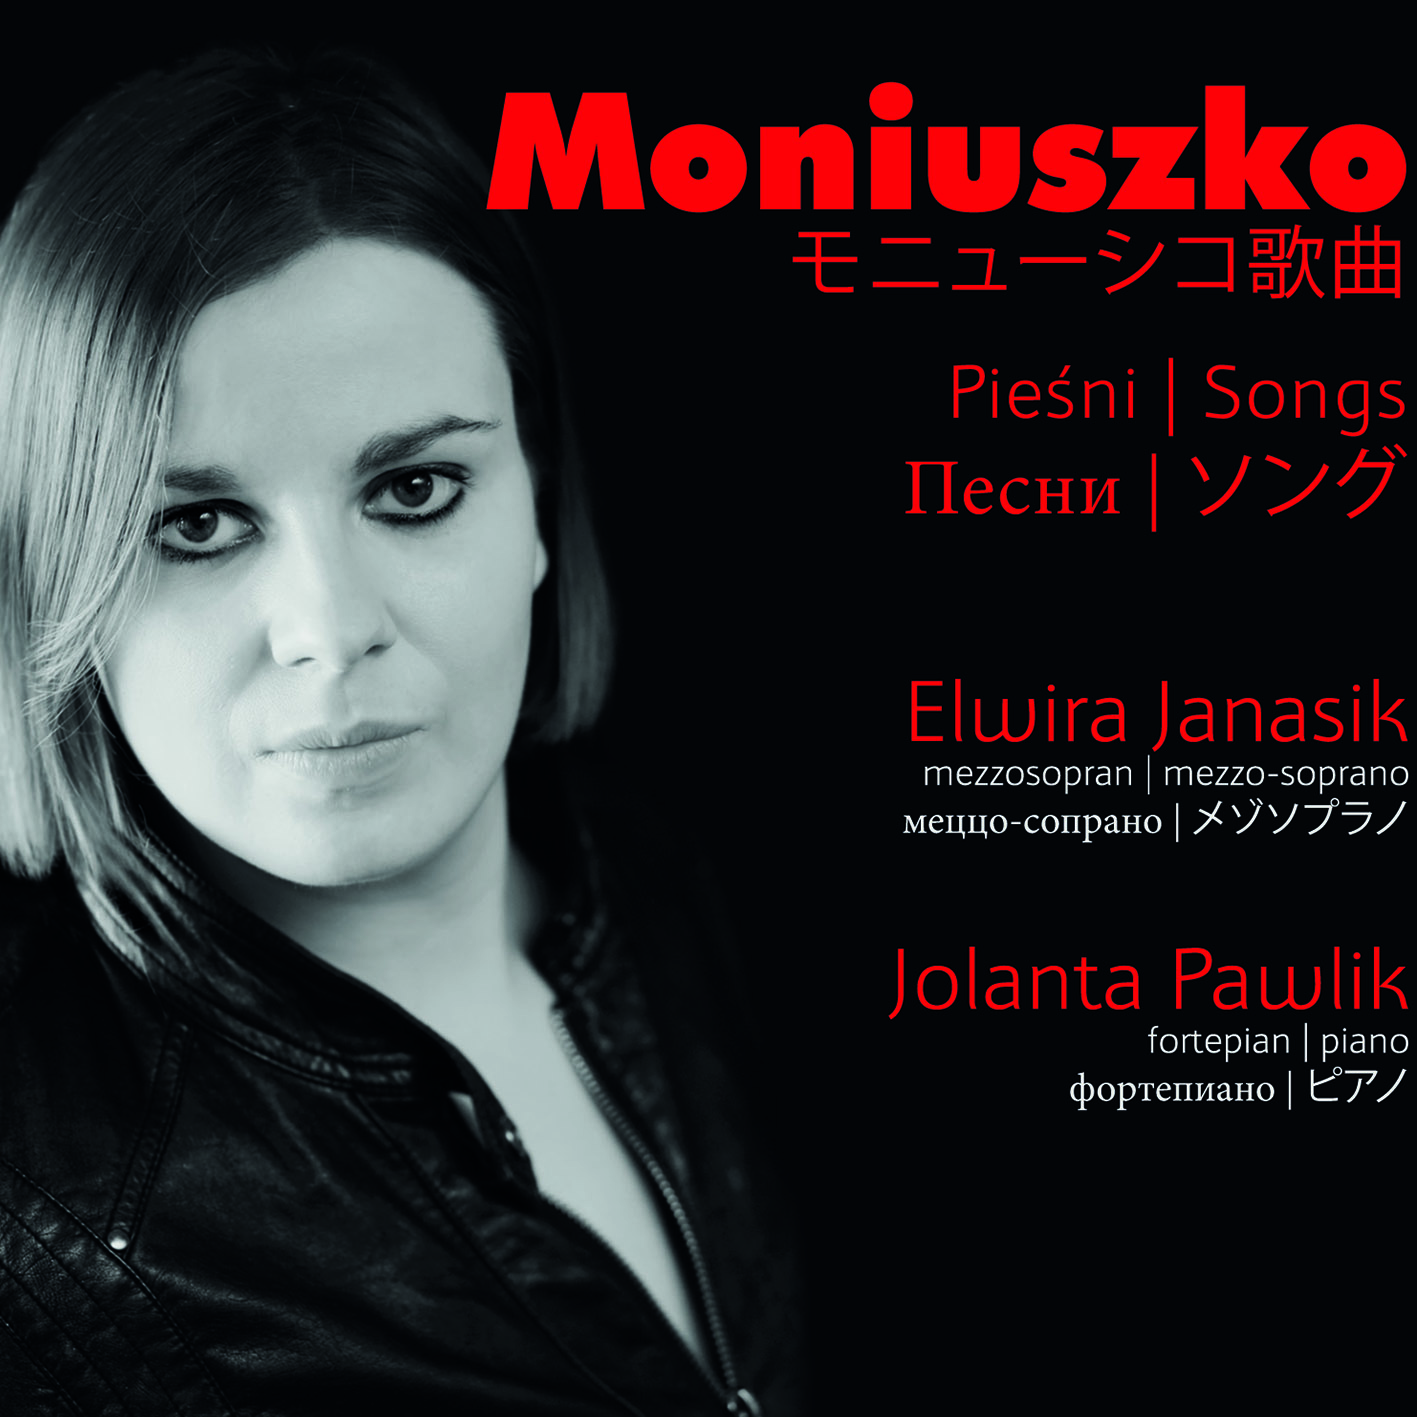 Moniuszko-Pieśni vol.1 2014 - Jolanta Pszczółkowska-Pawlik